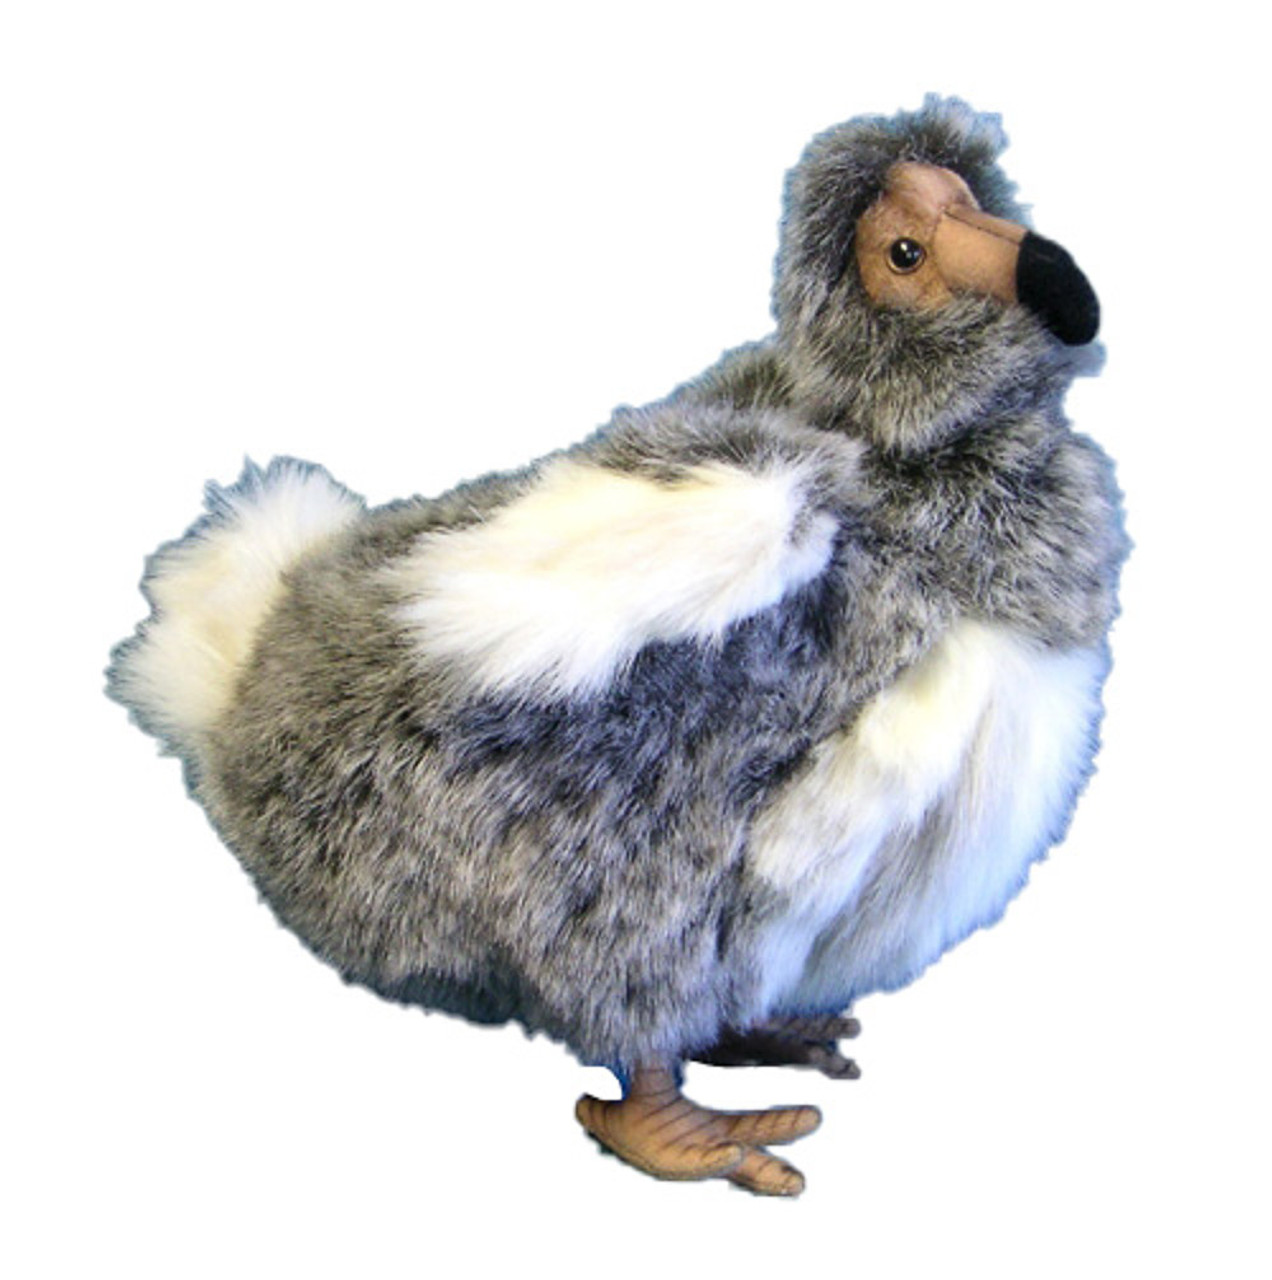 dodo bird stuffed animal